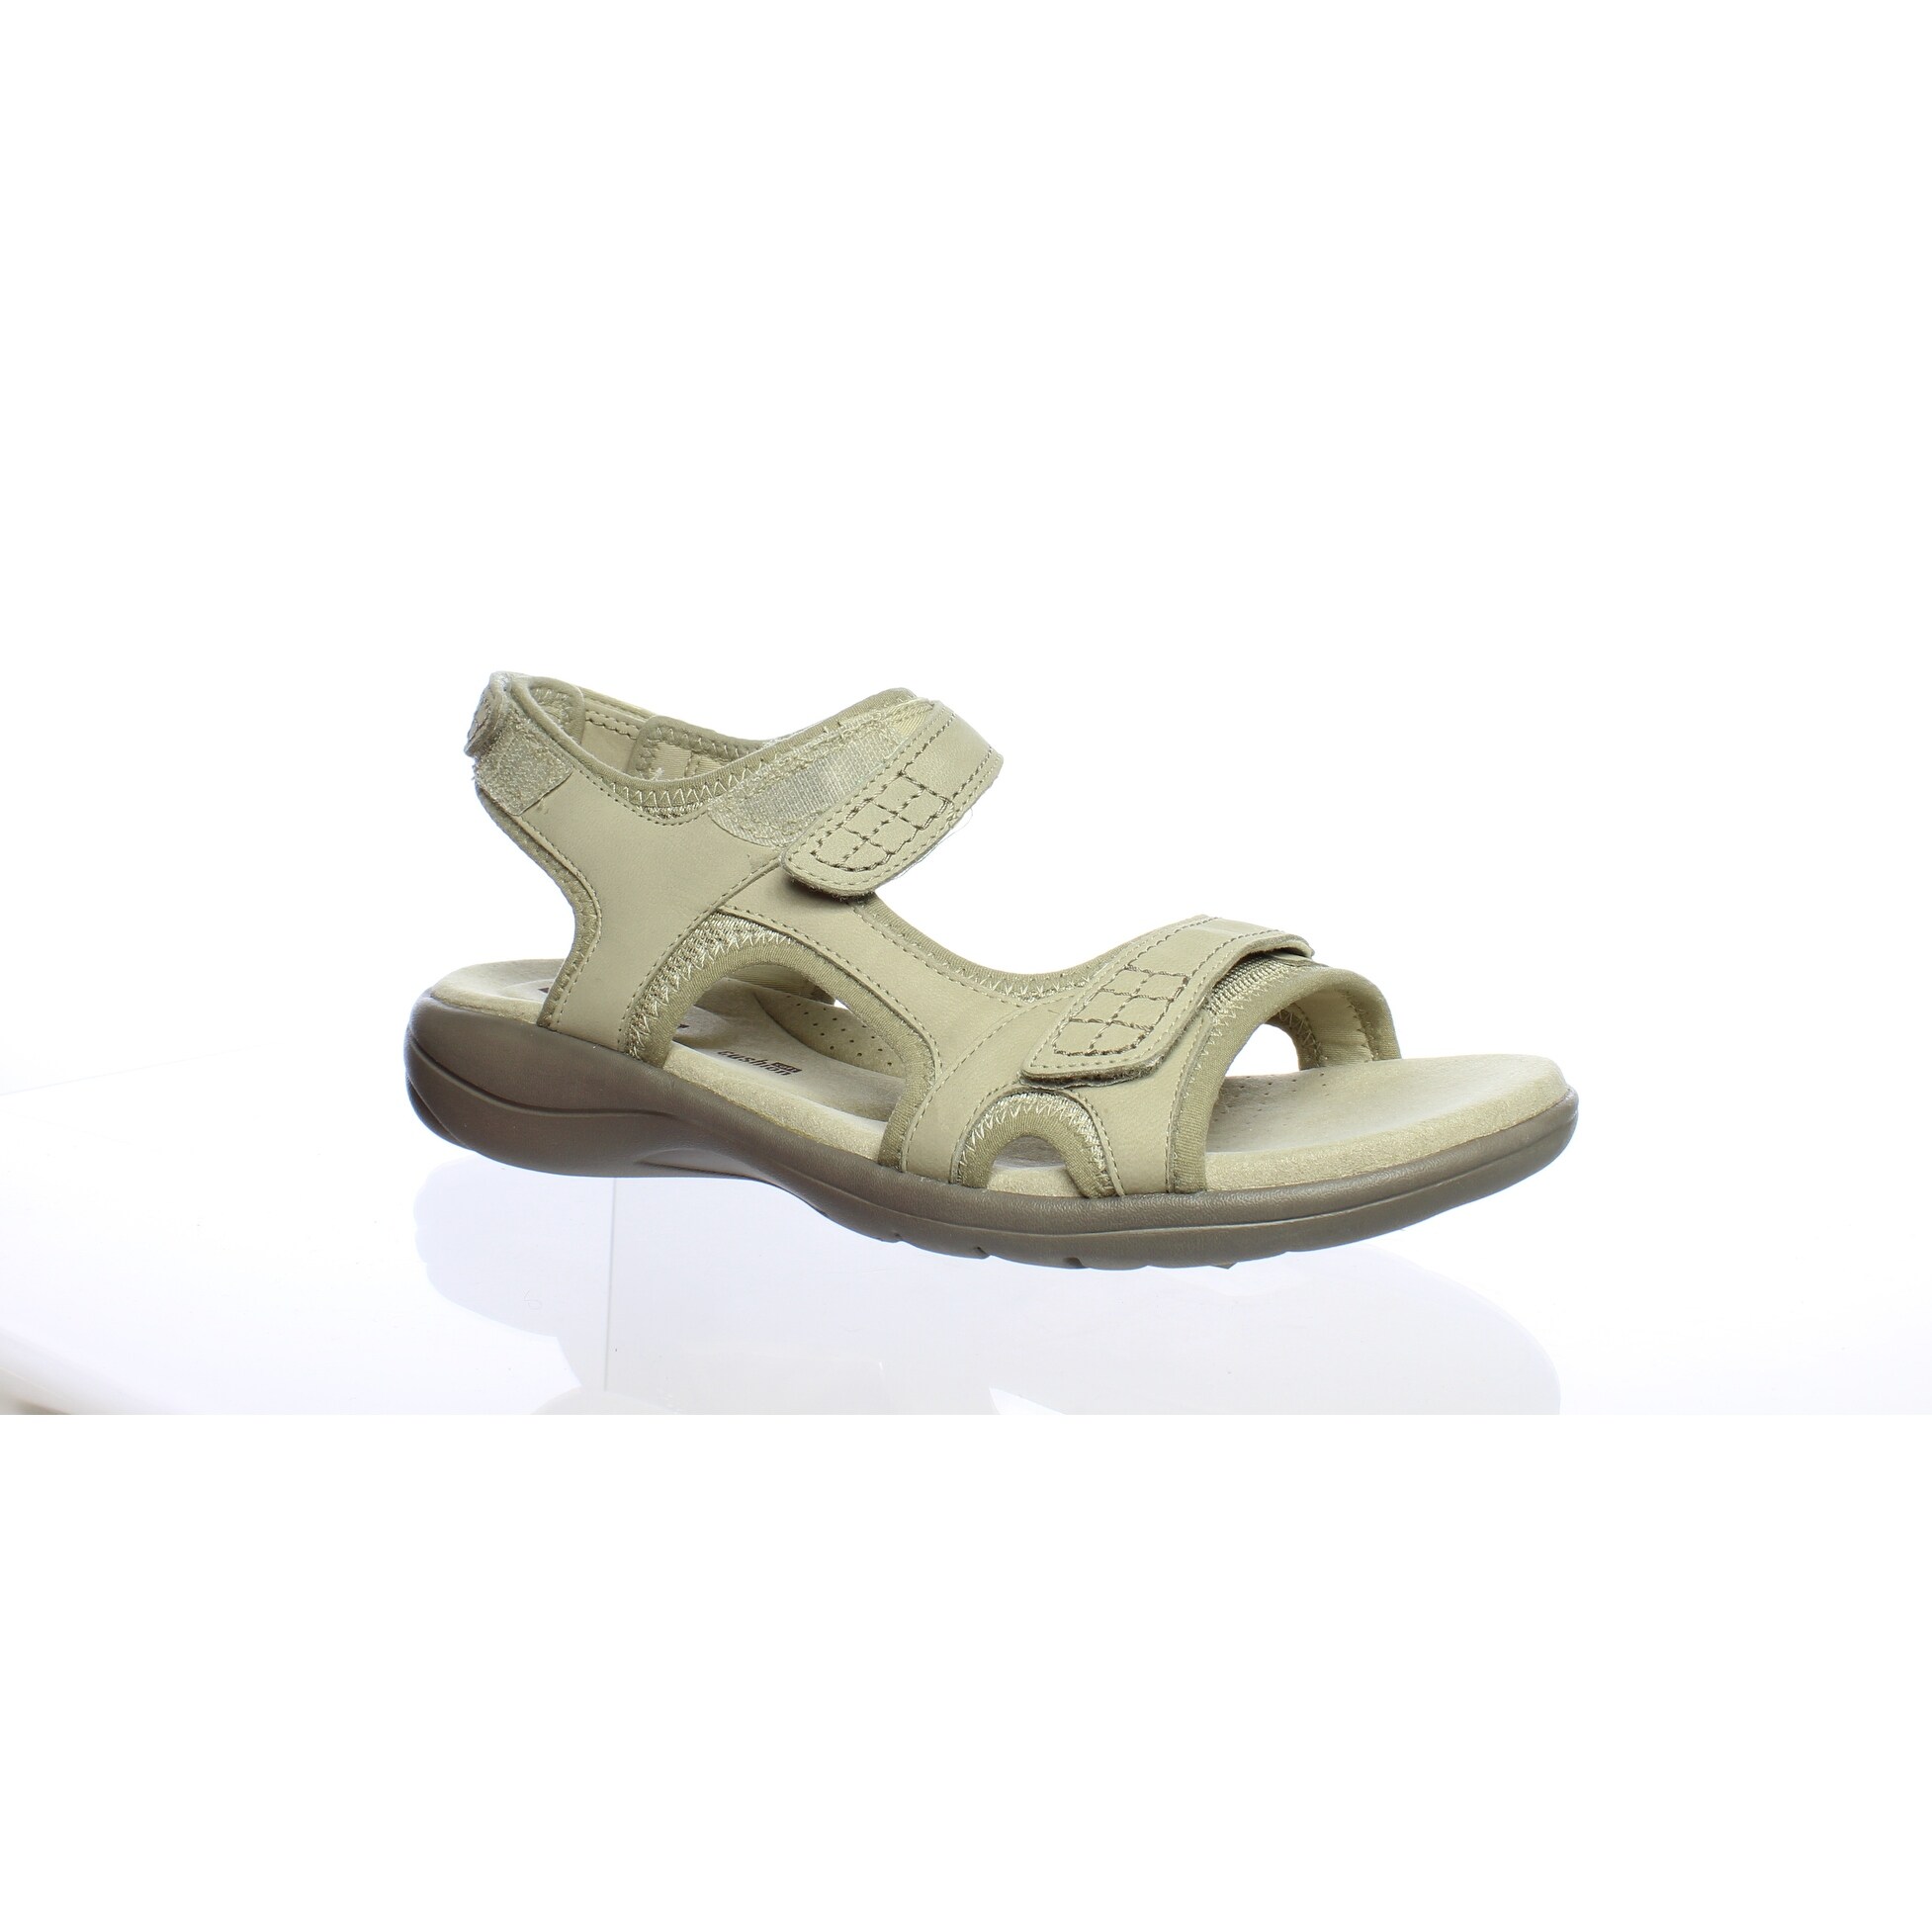 clarks saylie jade sandals